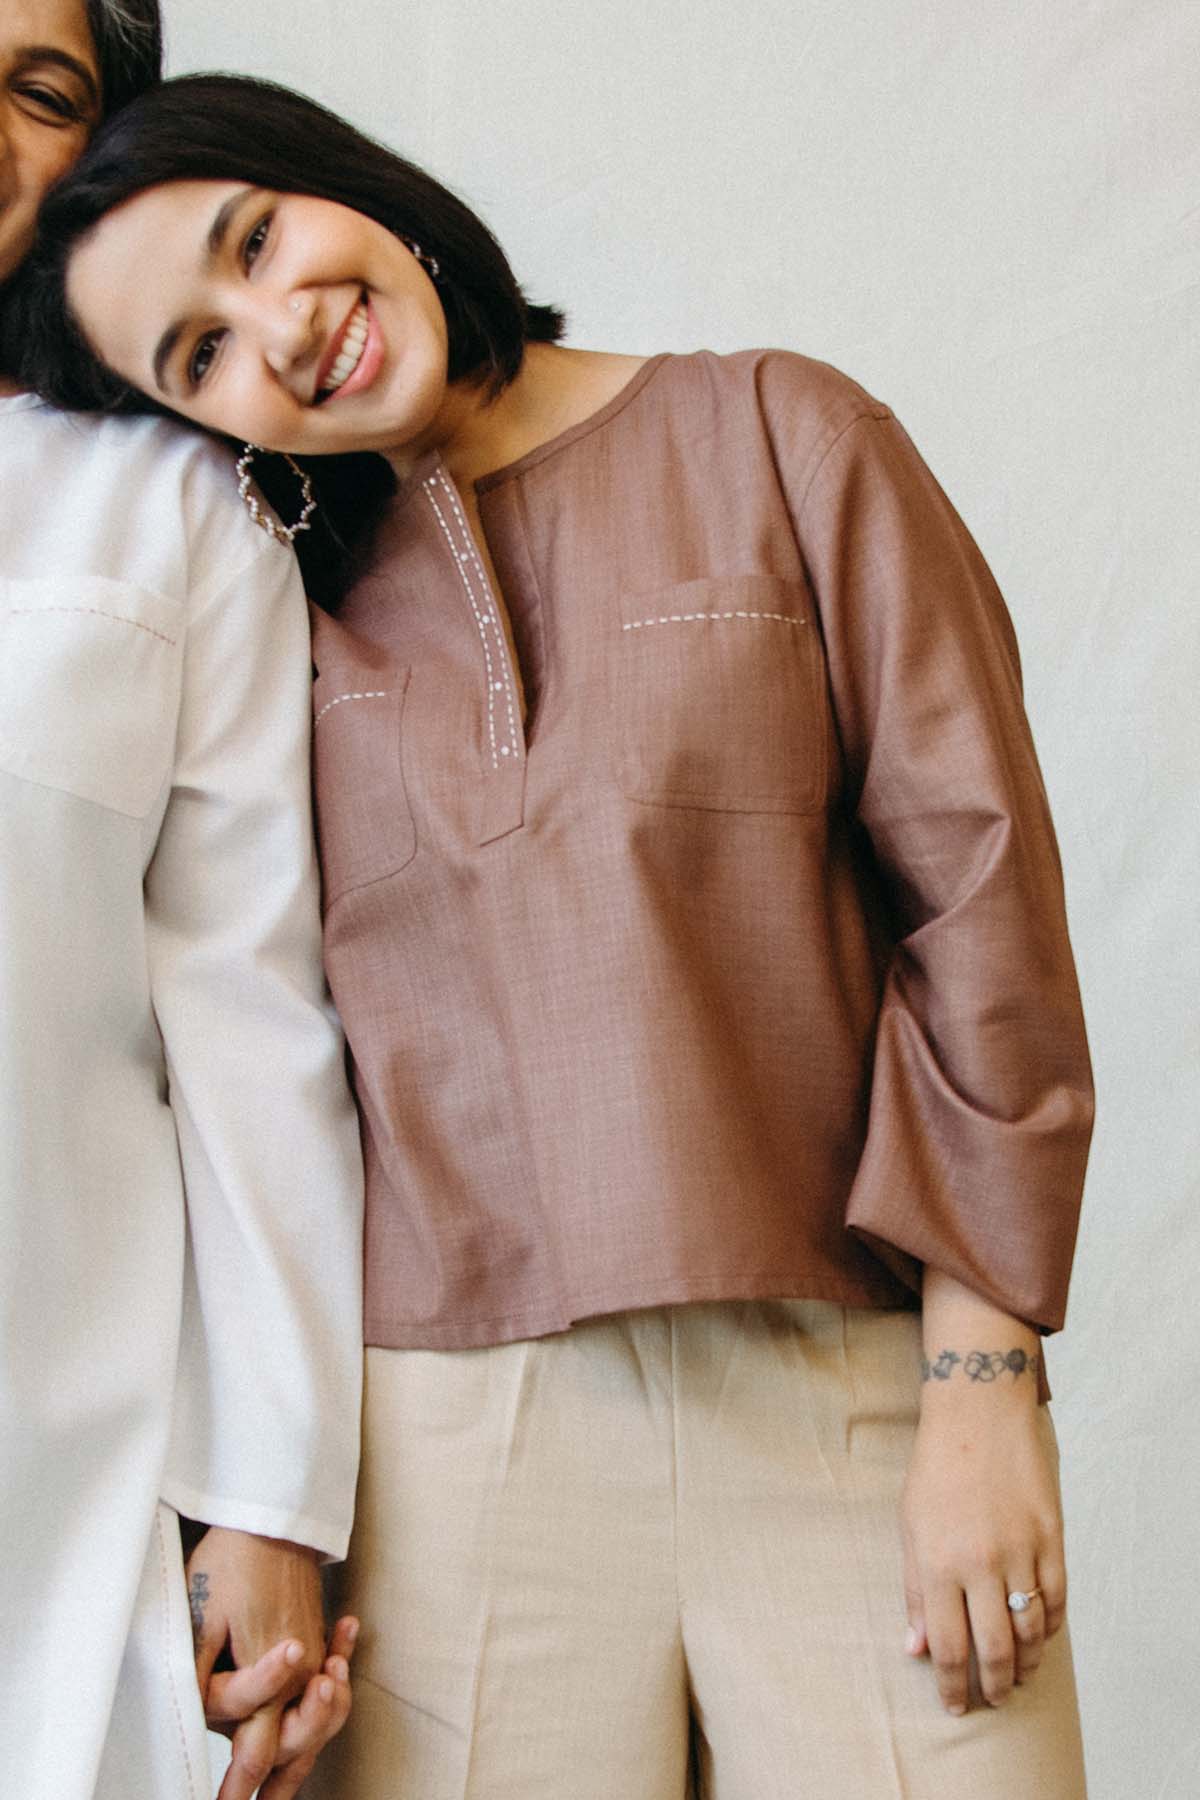 Chhaya Gandhi Brown Cotton Full Sleeve Top for women online at ScrollnShops